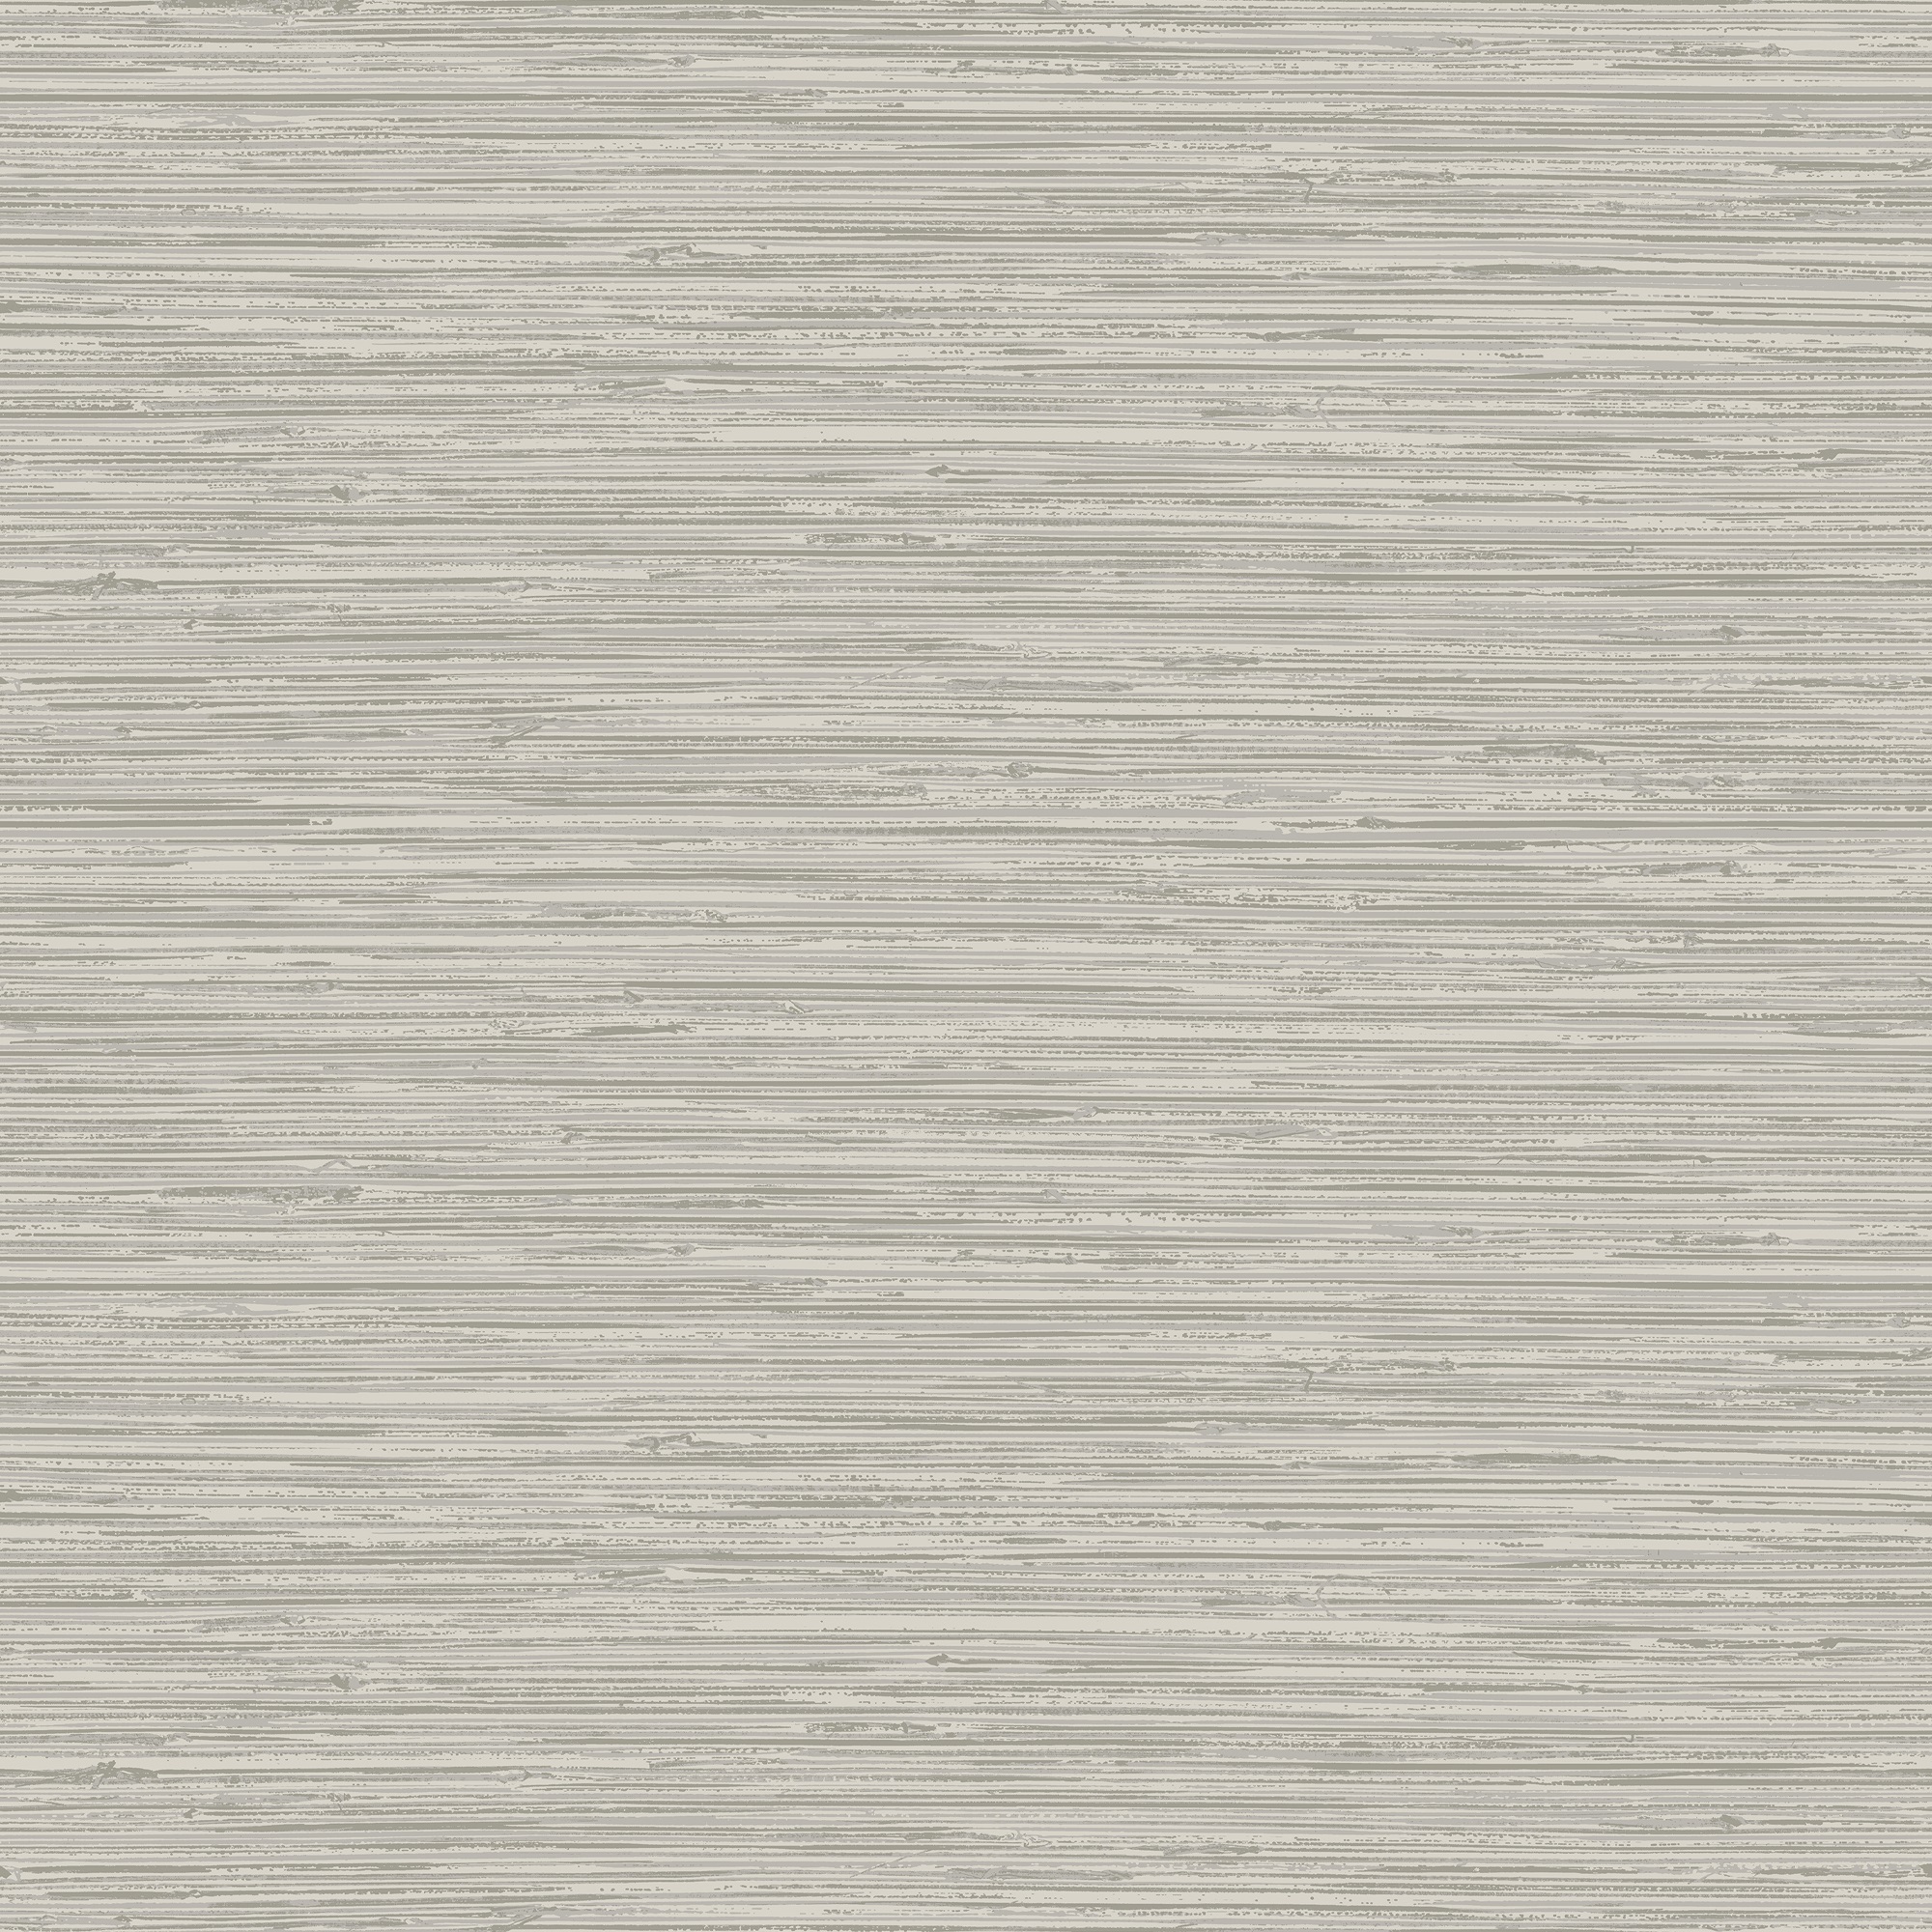 Superfresco Easy Serenity Plain Neutral Wallpaper - 10m x 52cm